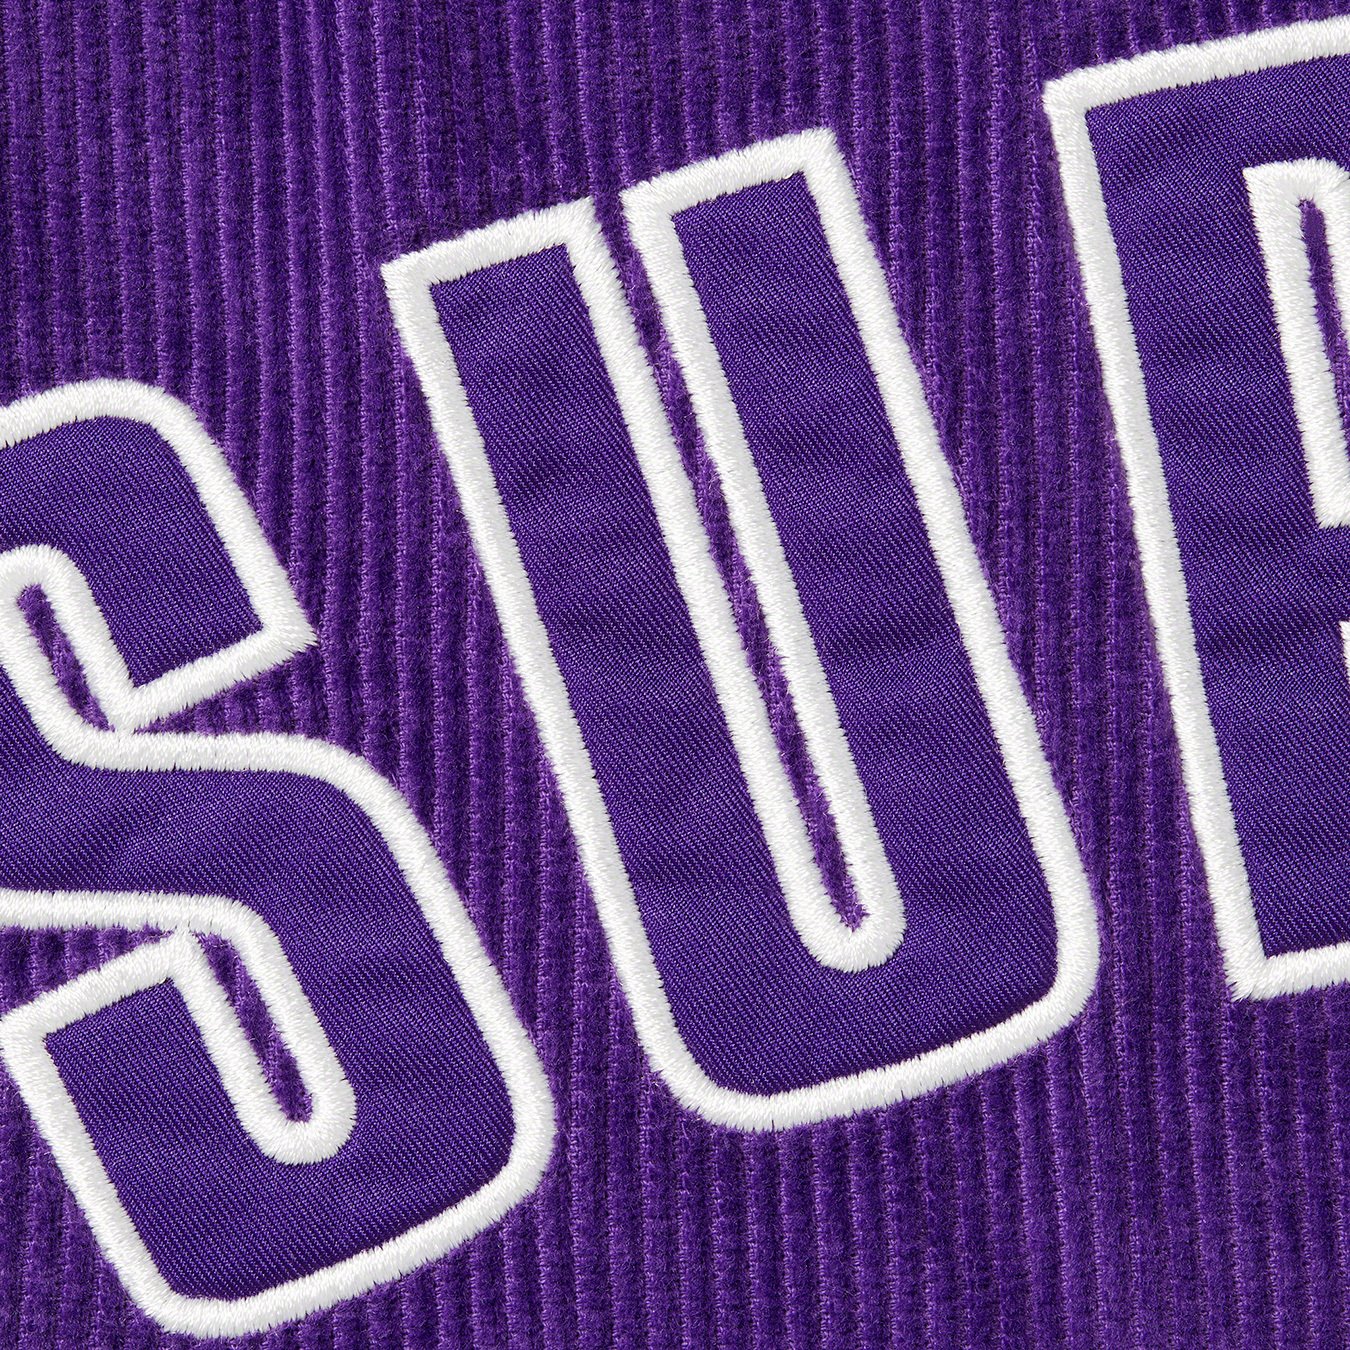 Supreme Nike Arc Corduroy Hooded Jacket 3colors Black Purple Red Camo Size  S-XXL